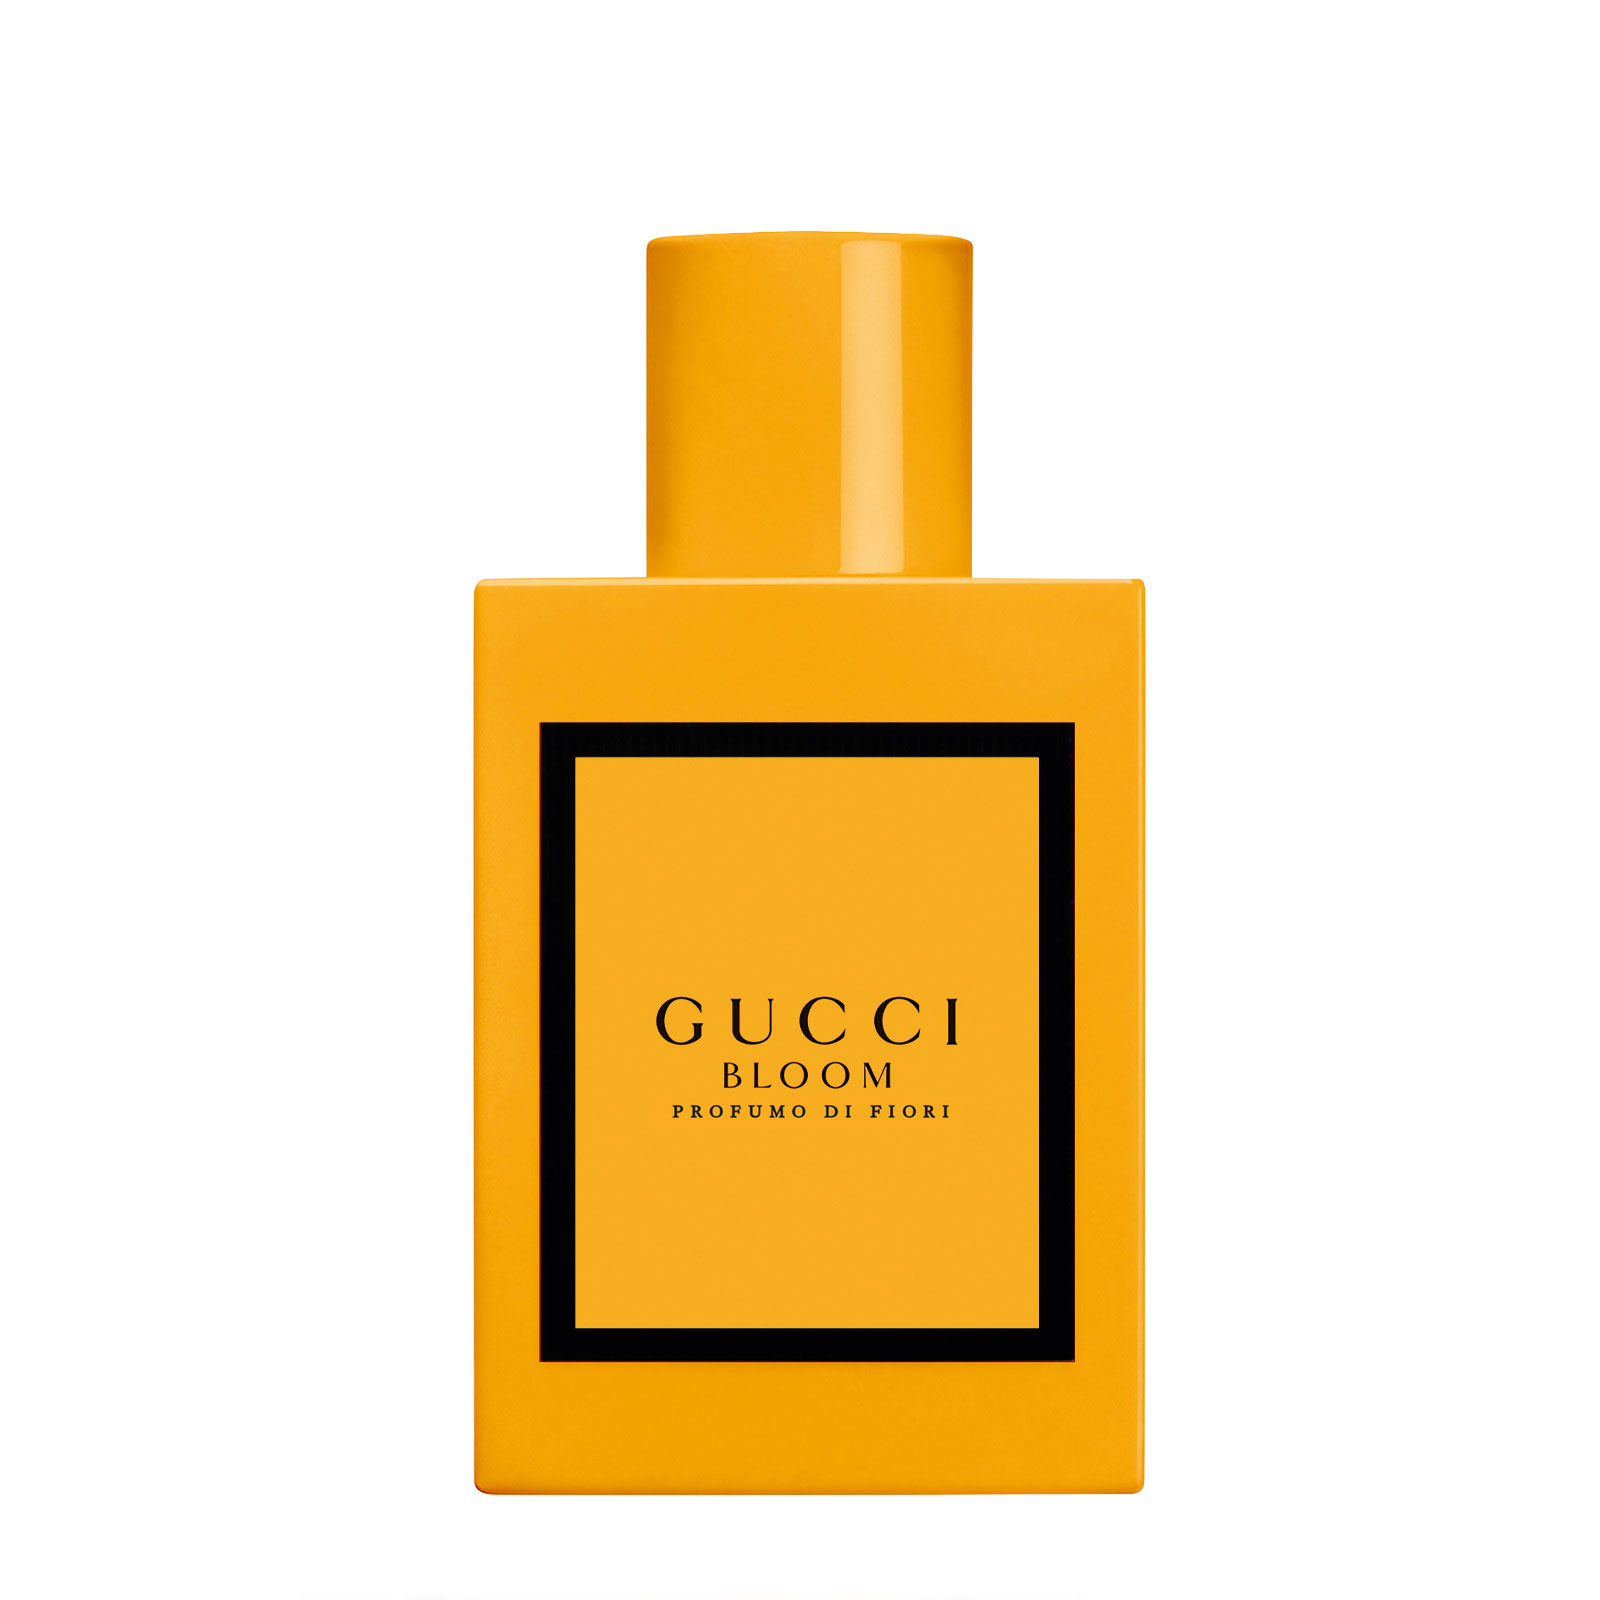 Gucci Bloom Profumo Di Fiori Eau De Parfum For Her 50Ml